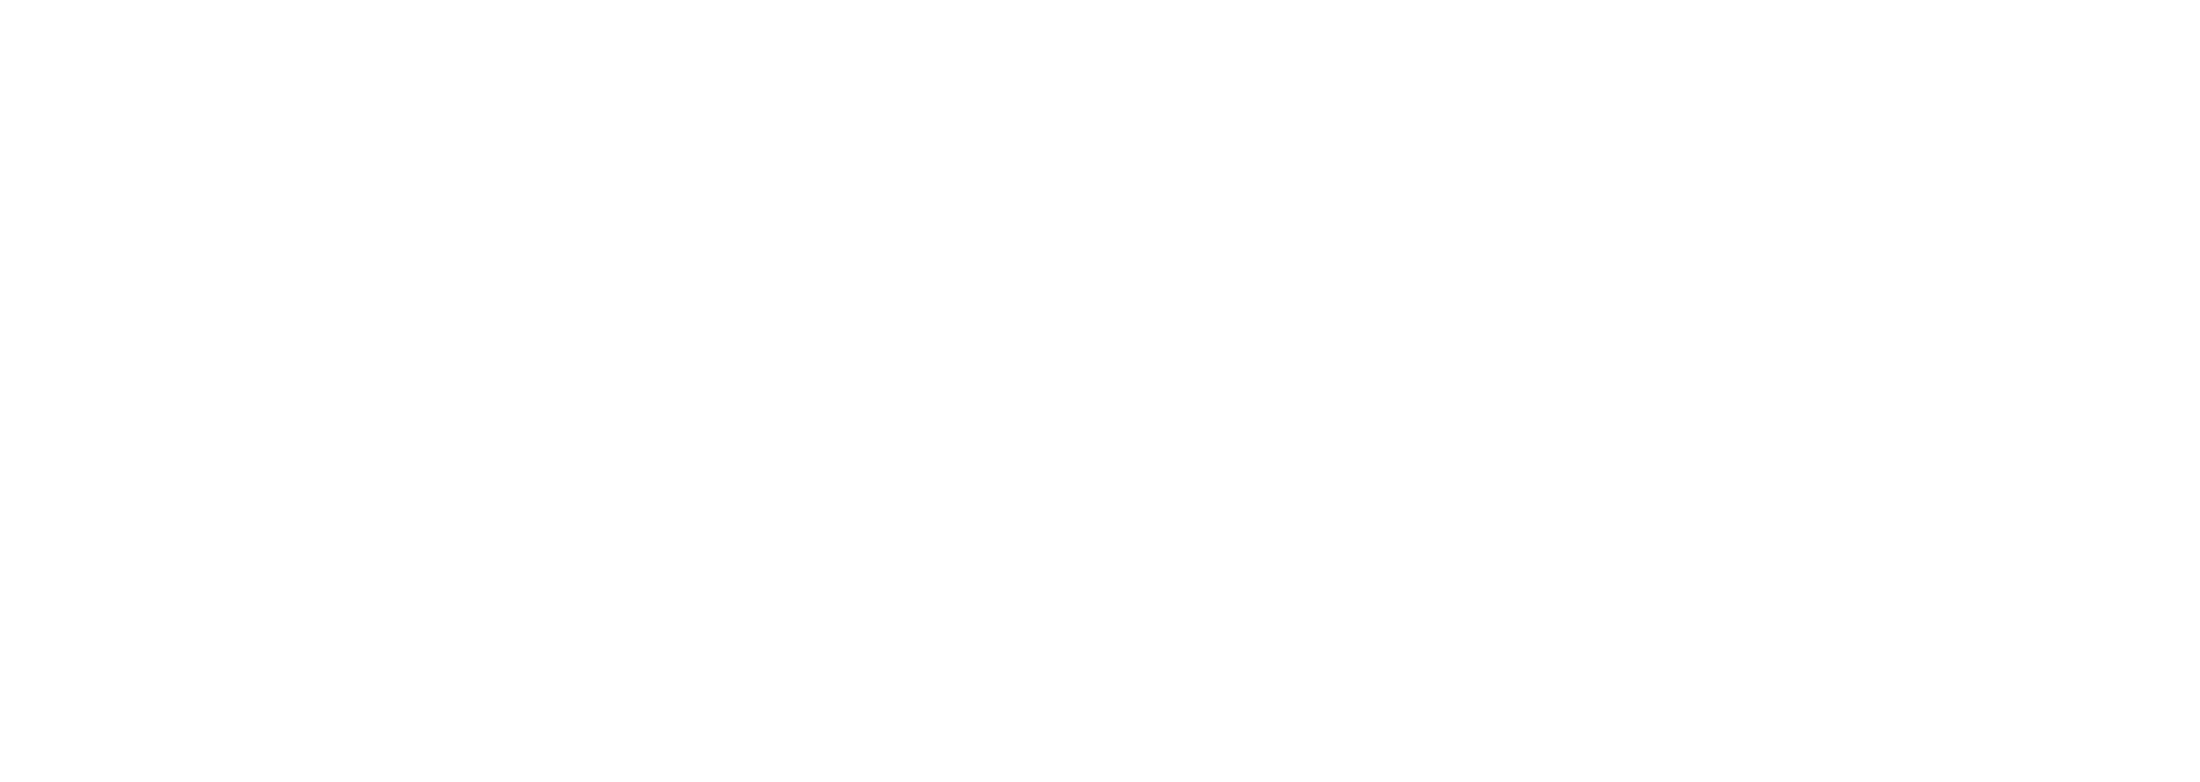 Wine & Book Hotels - Logótipo white